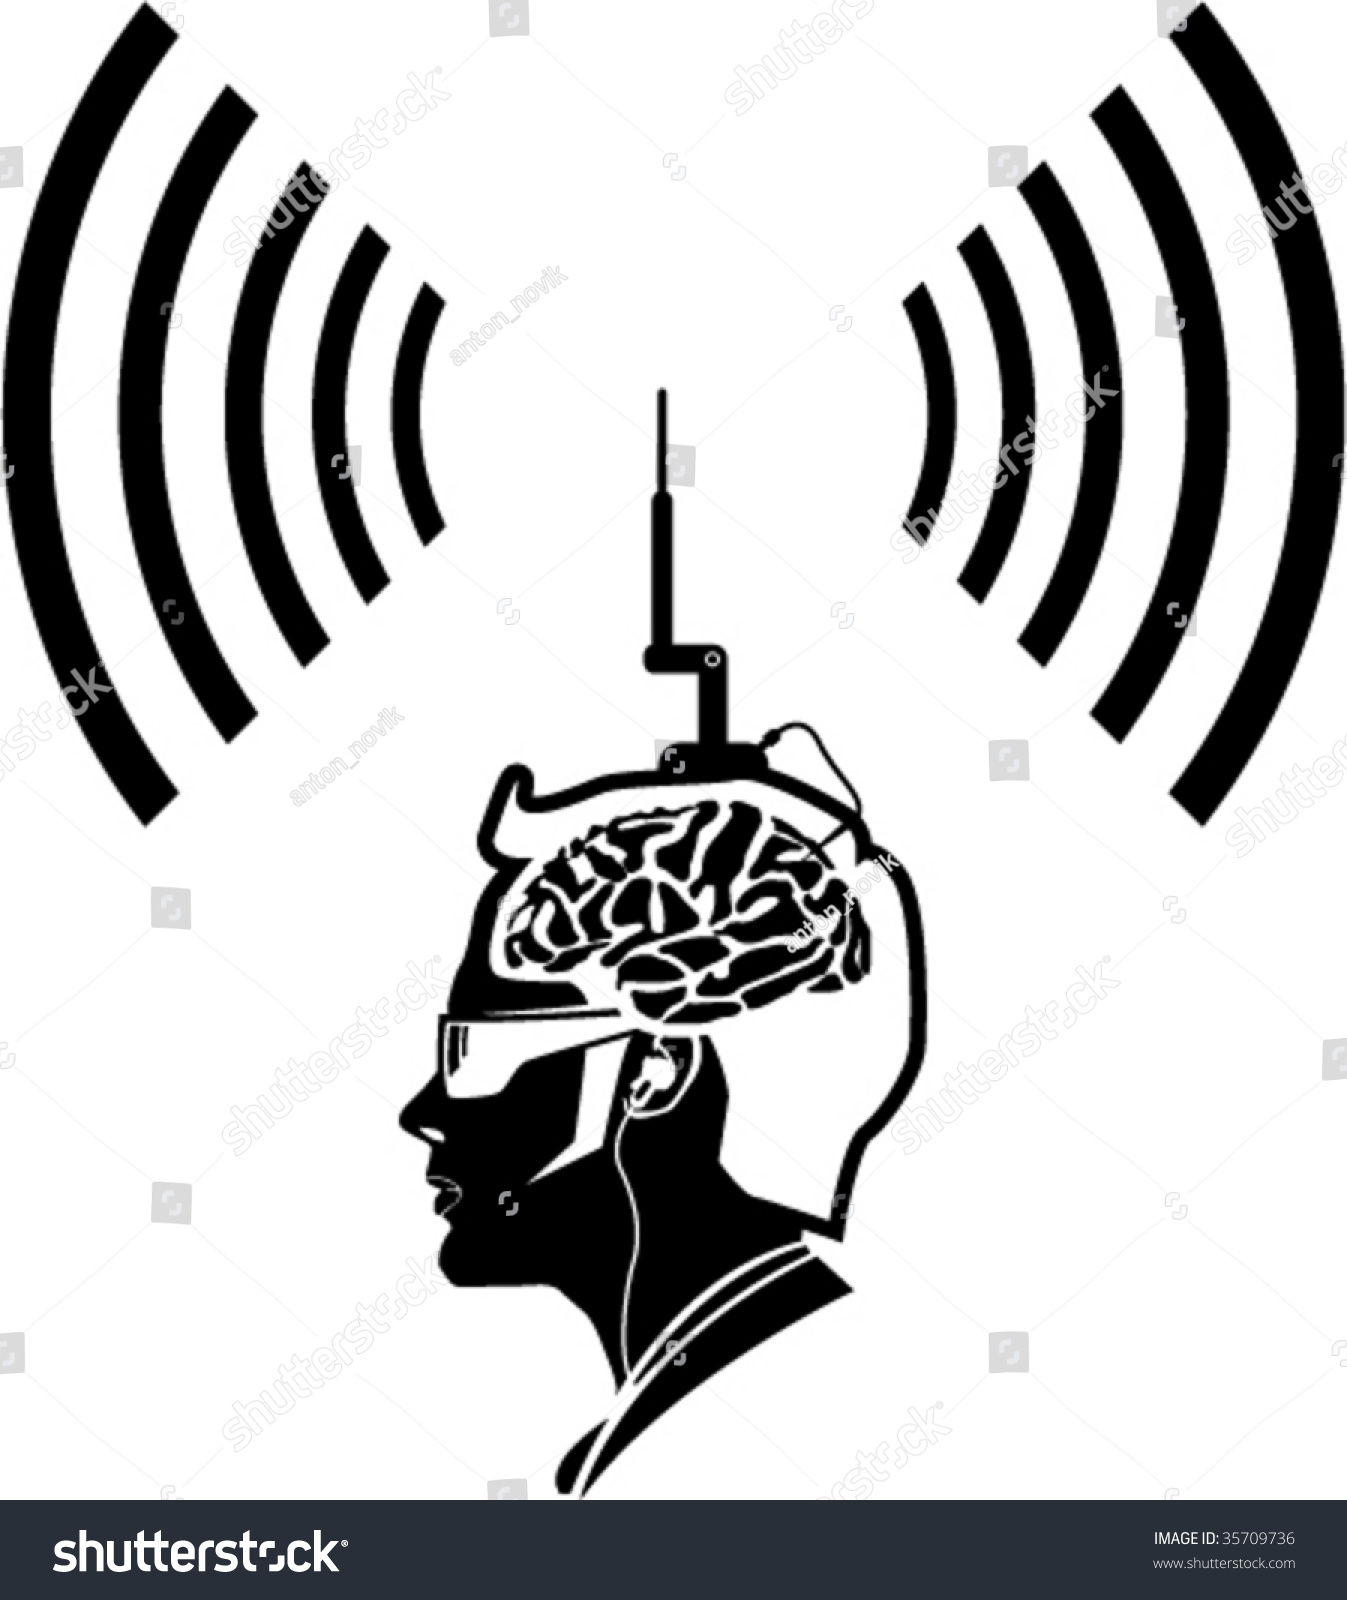 Human Brain Antenna Thought Waves Stock Vector Illustration 35709736 ...